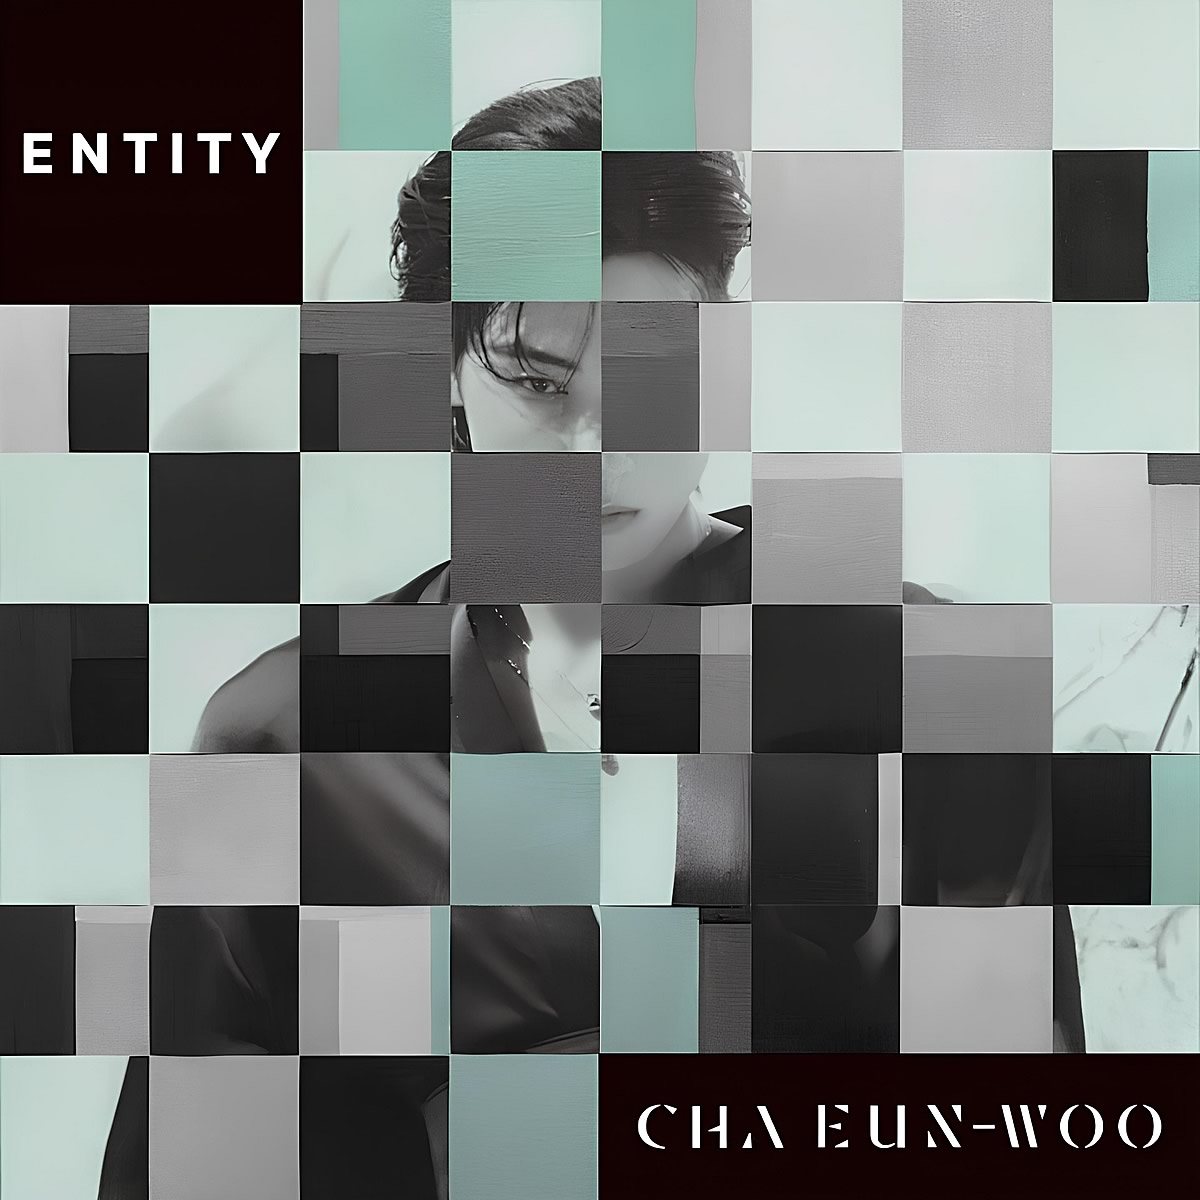 ENTITY - Lançamento do Mini álbum de Cha Eun-woo